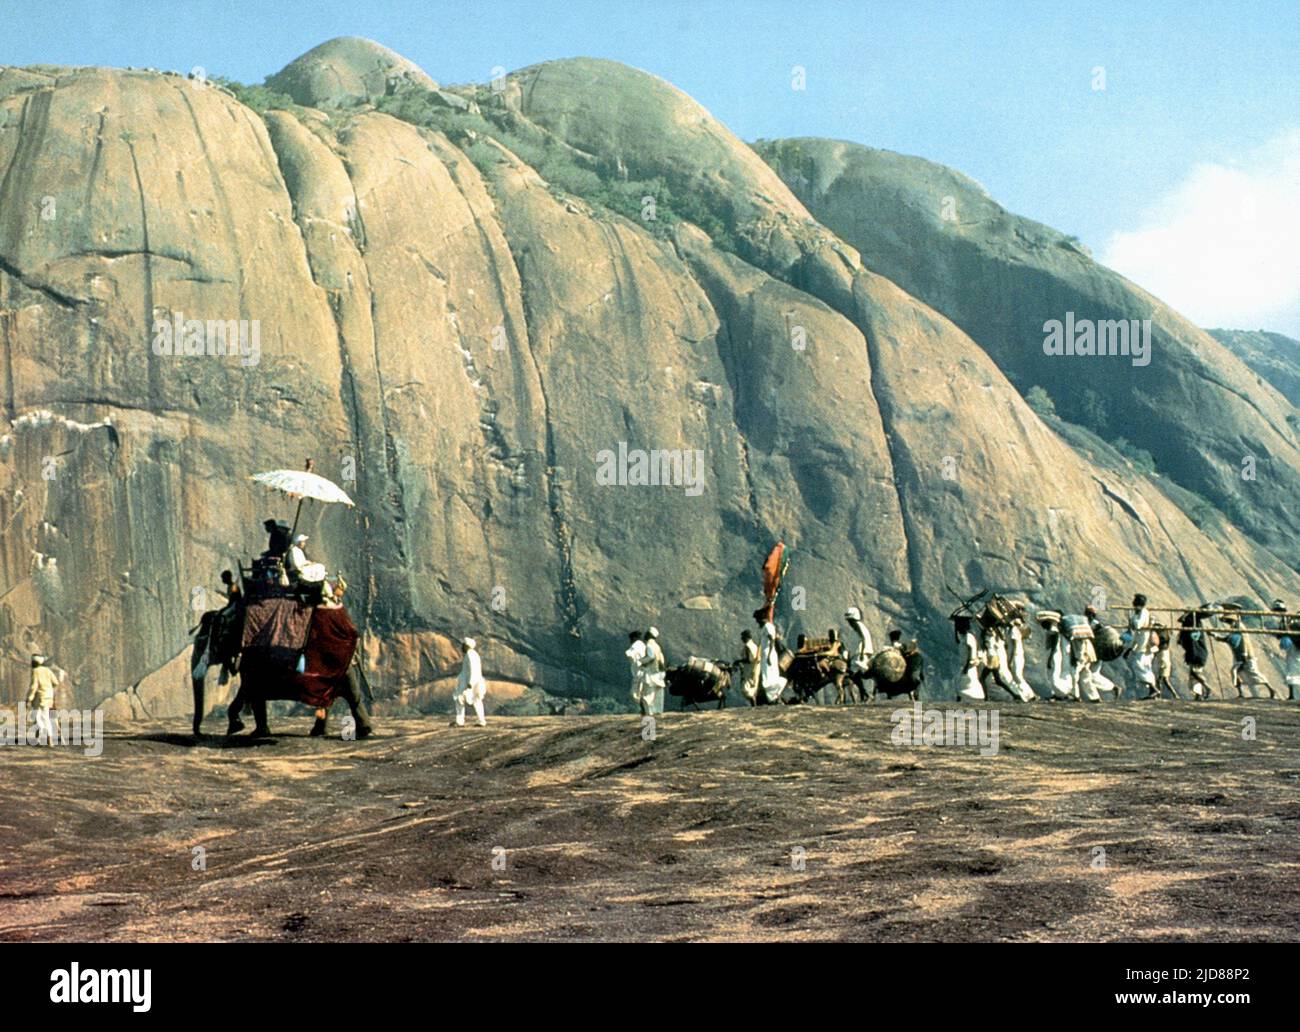 MOVIE SCENE, A PASSAGE TO INDIA, 1984, Stock Photo